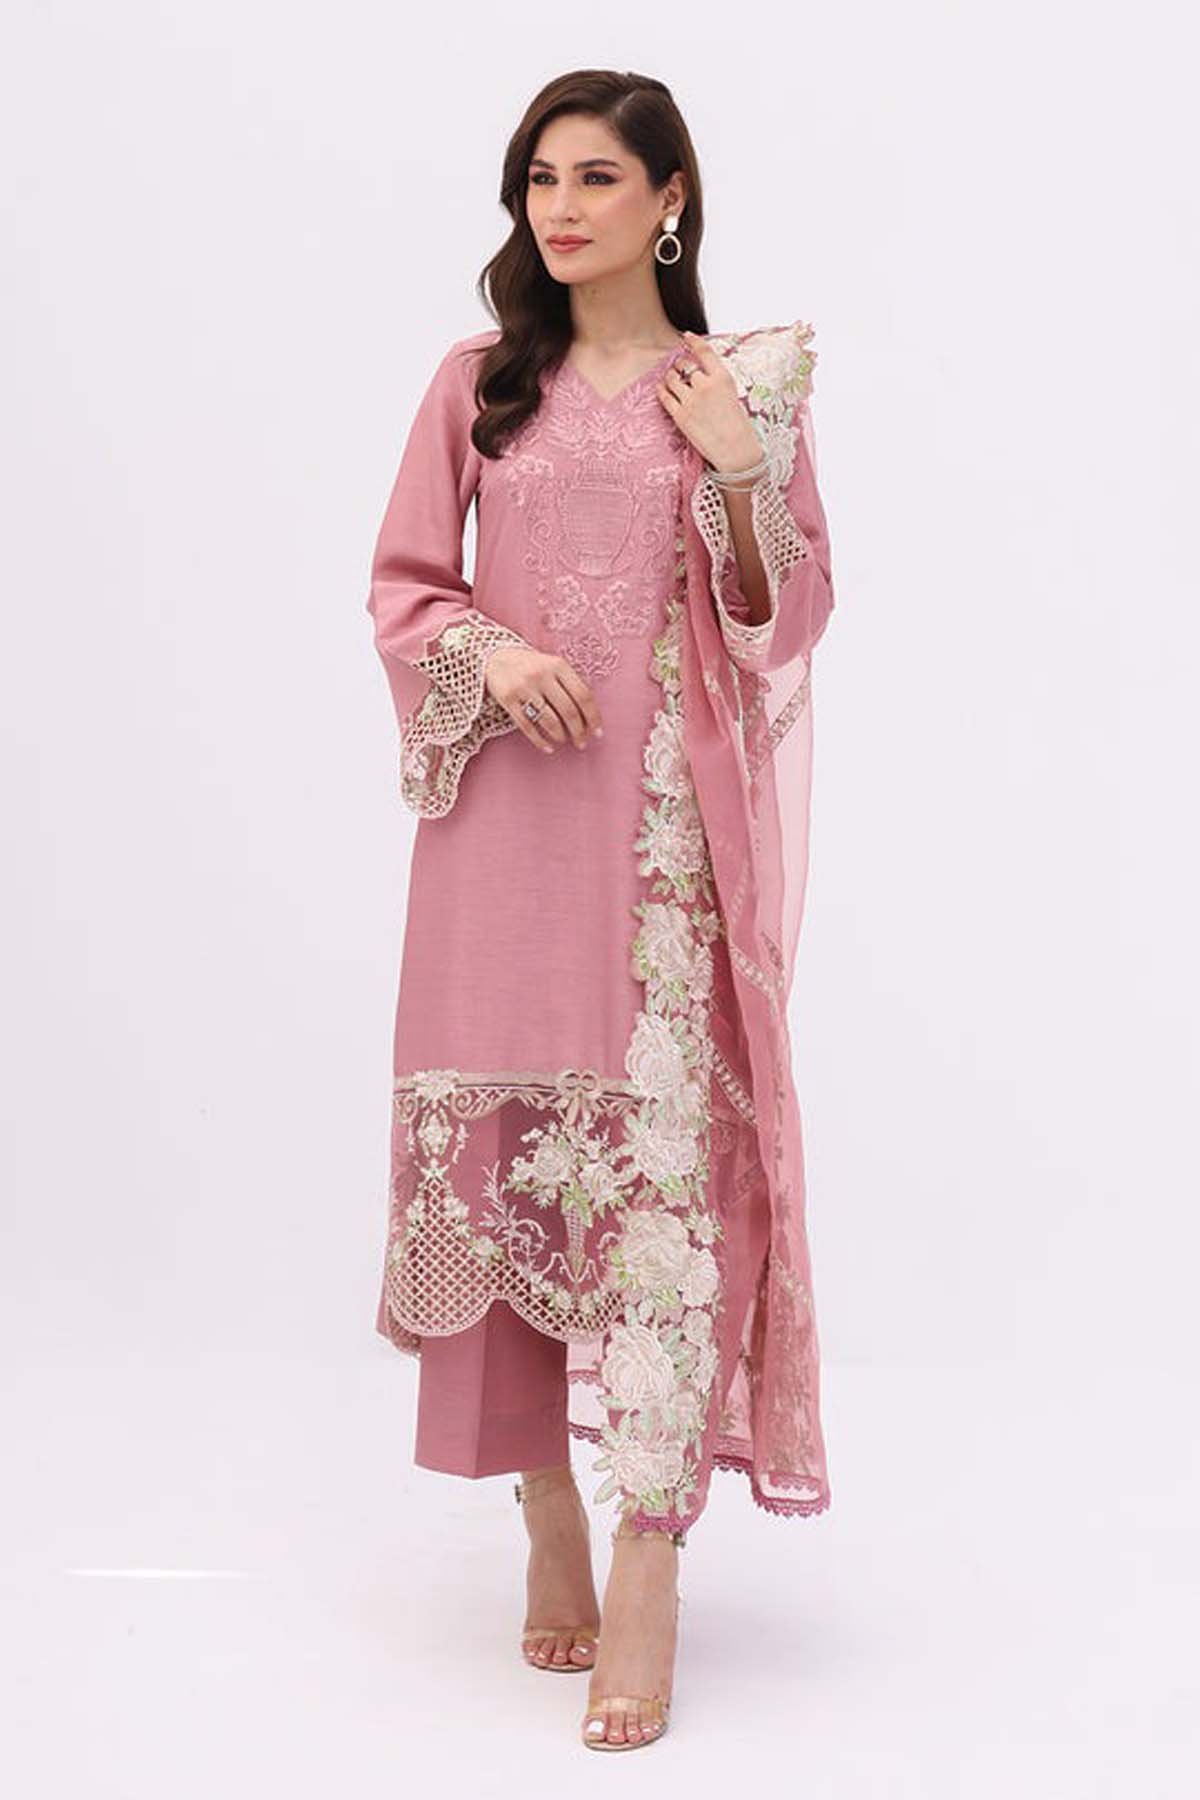 zainab chottani women new dress design empires collection pakistan girls fashion clothing suit 3piece top brand